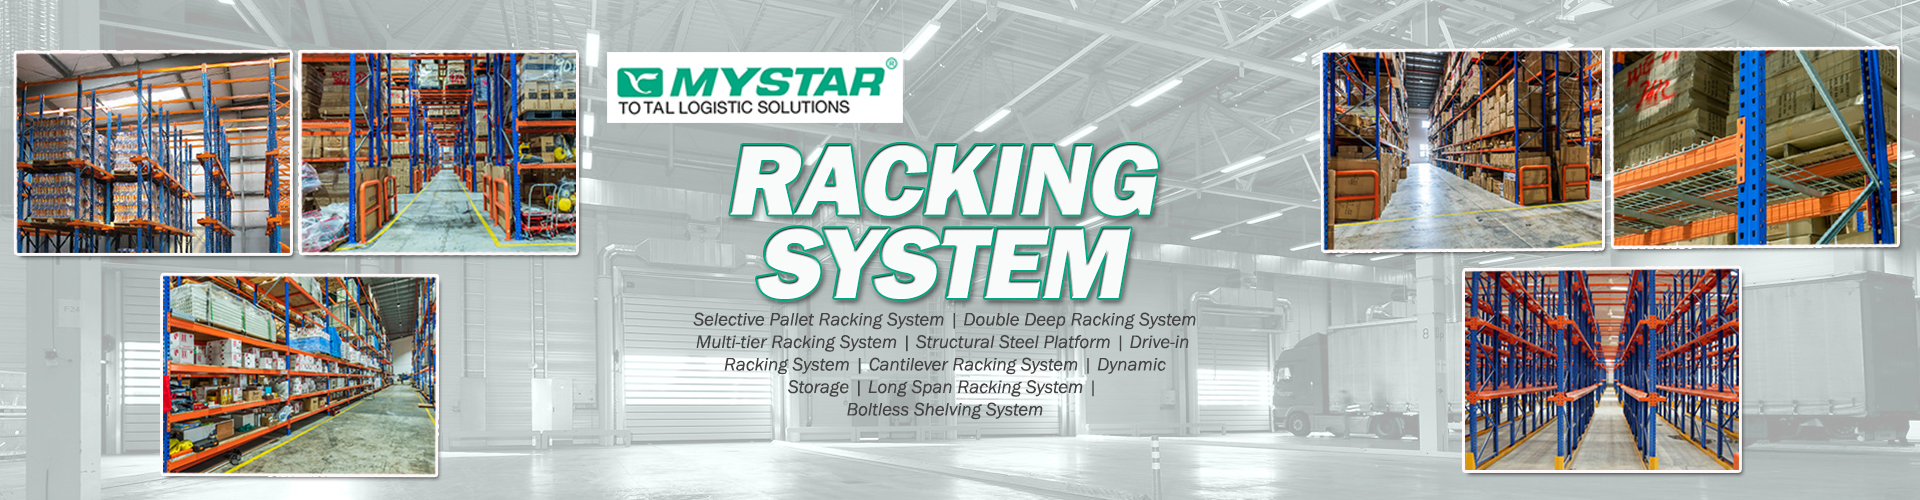 Racking System